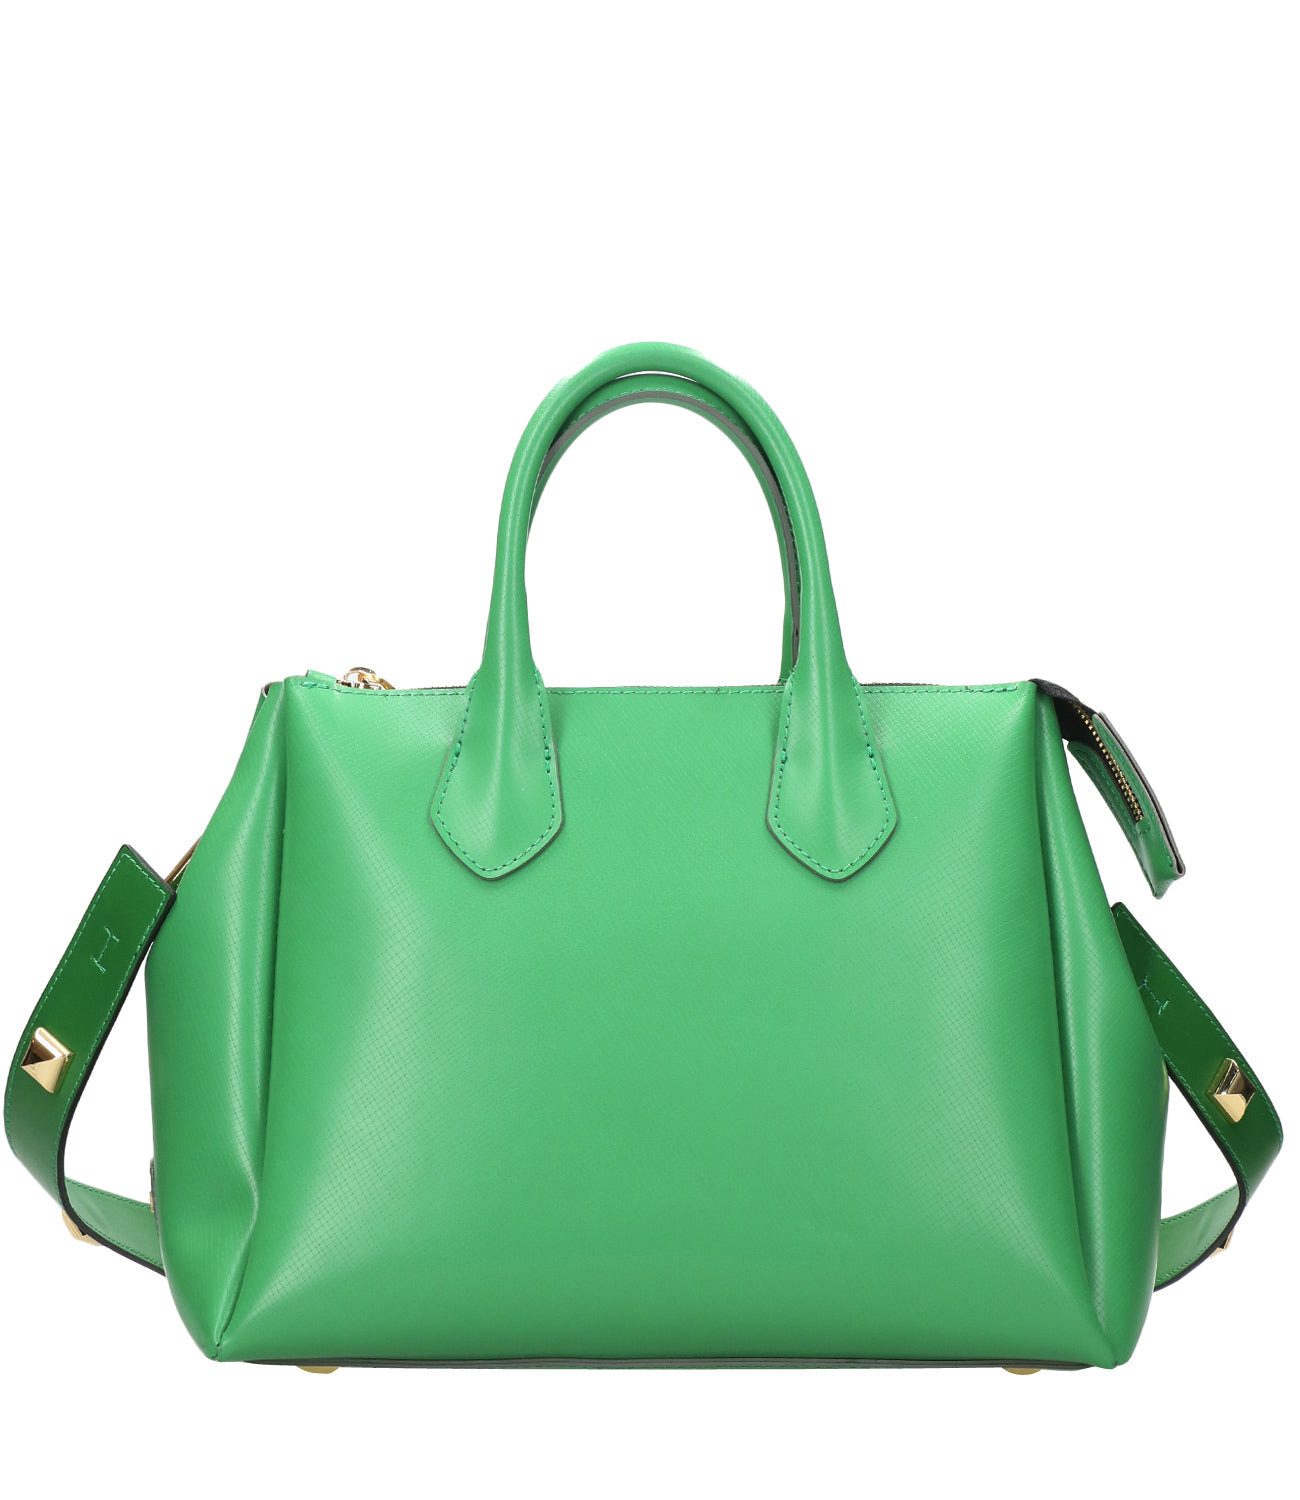 Gum design | Green bag